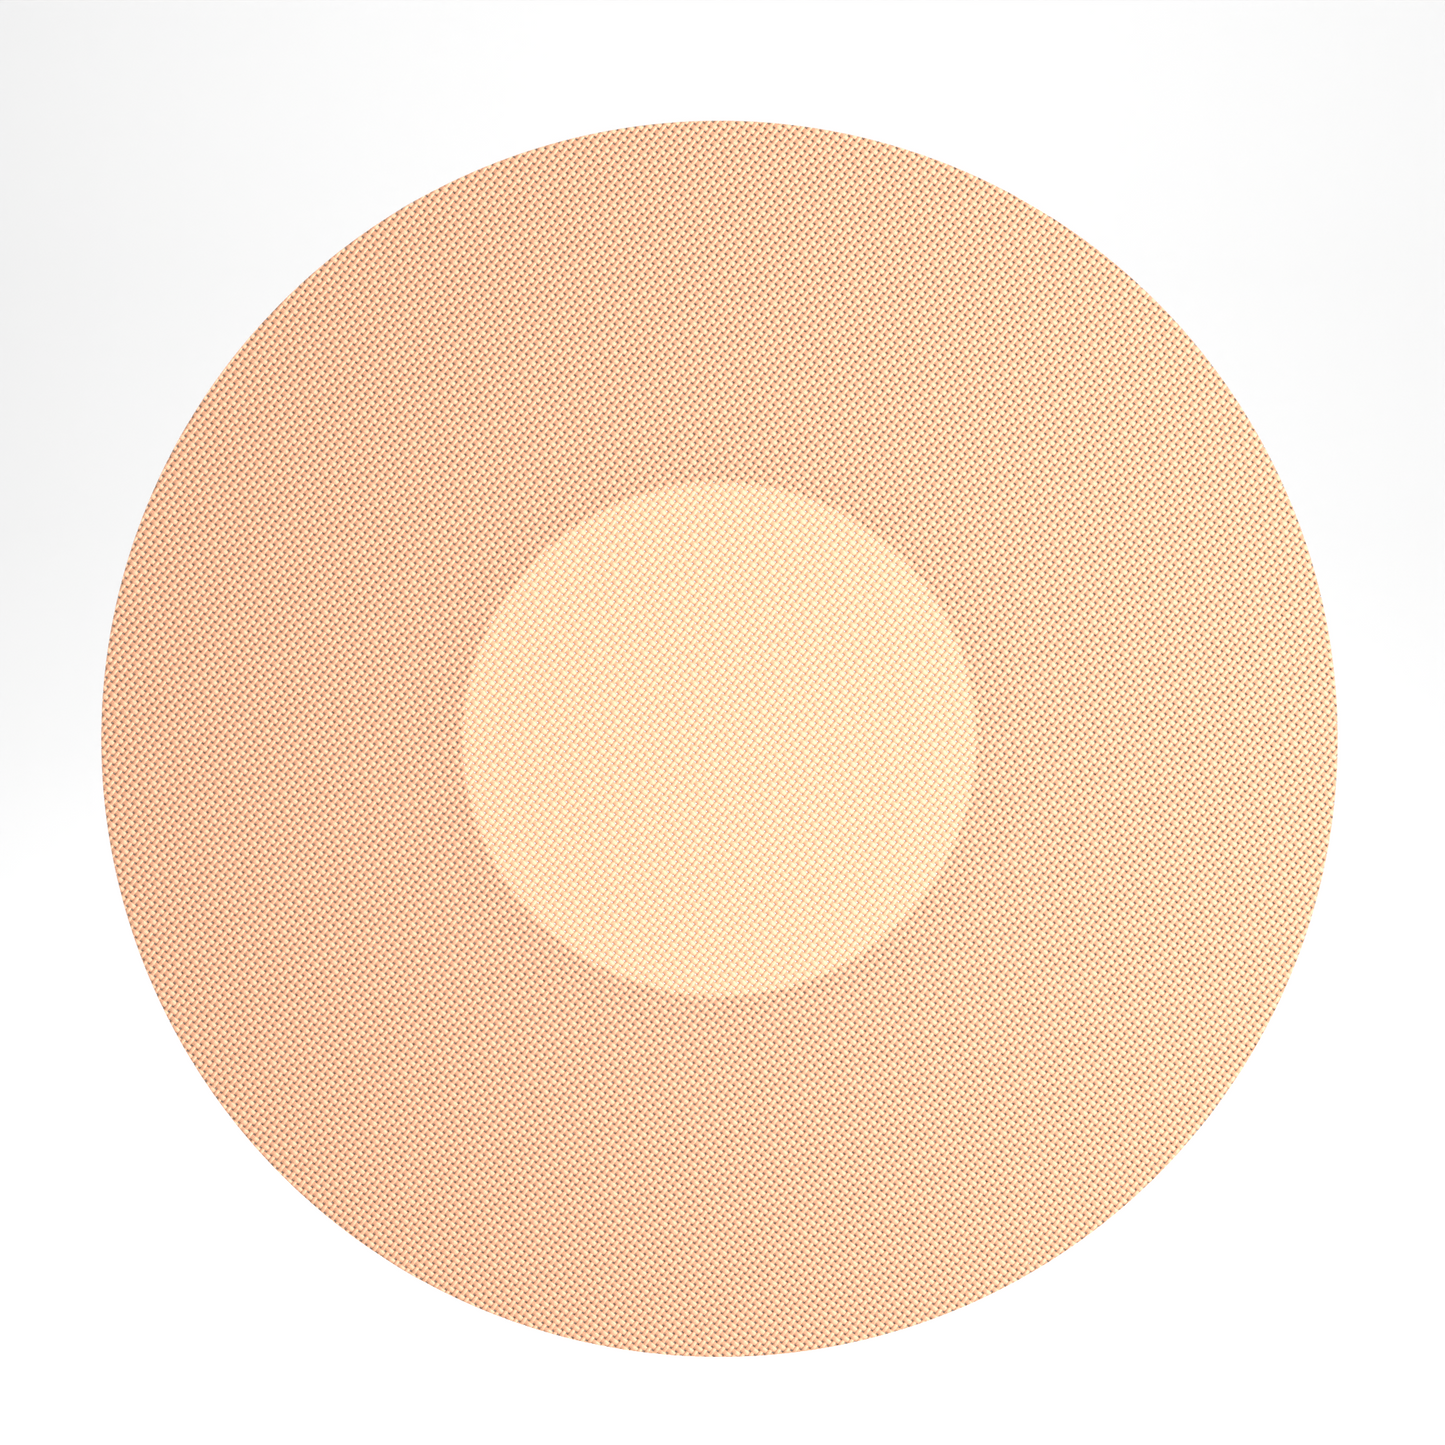 Lexcam Adhesive Patches pre-cut for Freestyle Libre 2 3, Color Tan, (30)